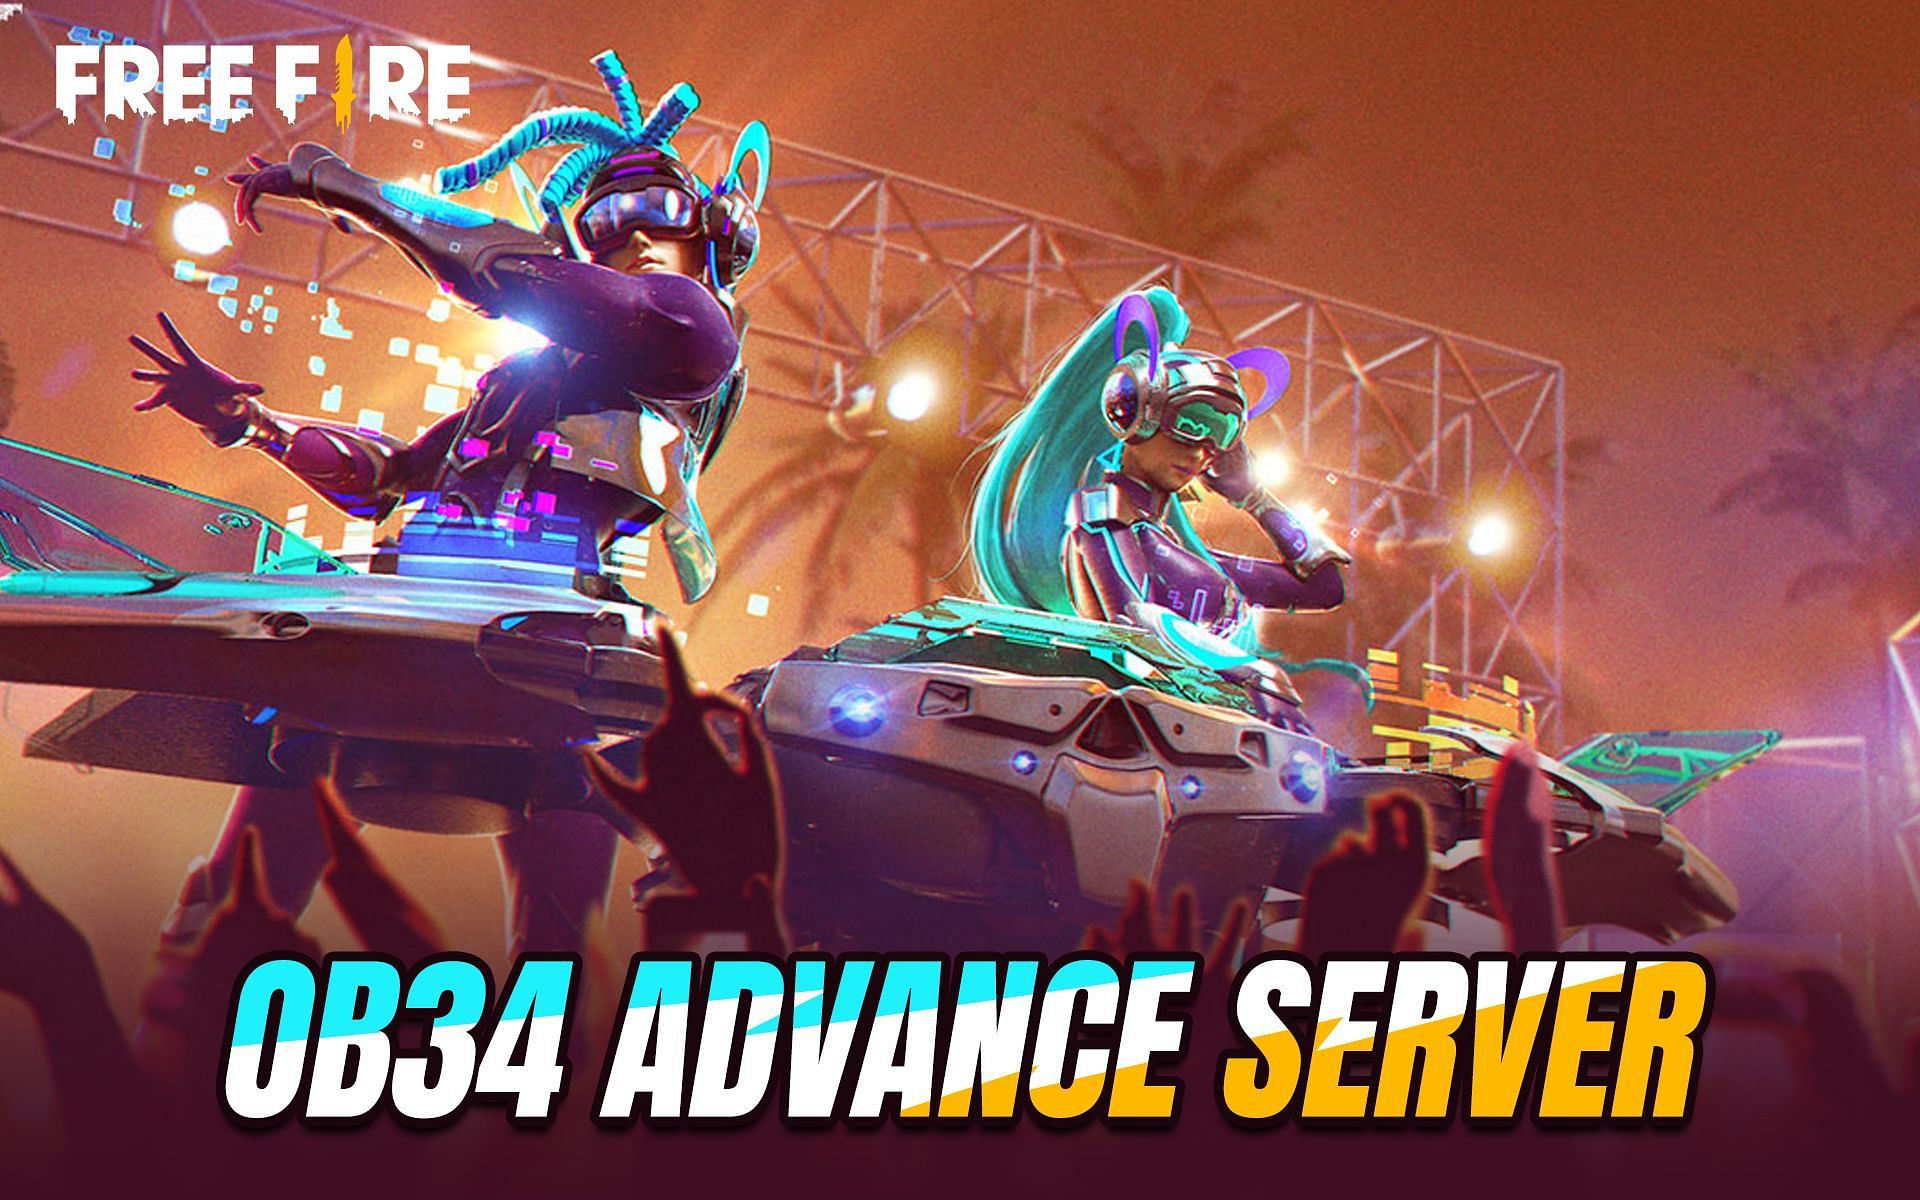 OB34 Advance Server is now available (Image via Garena)